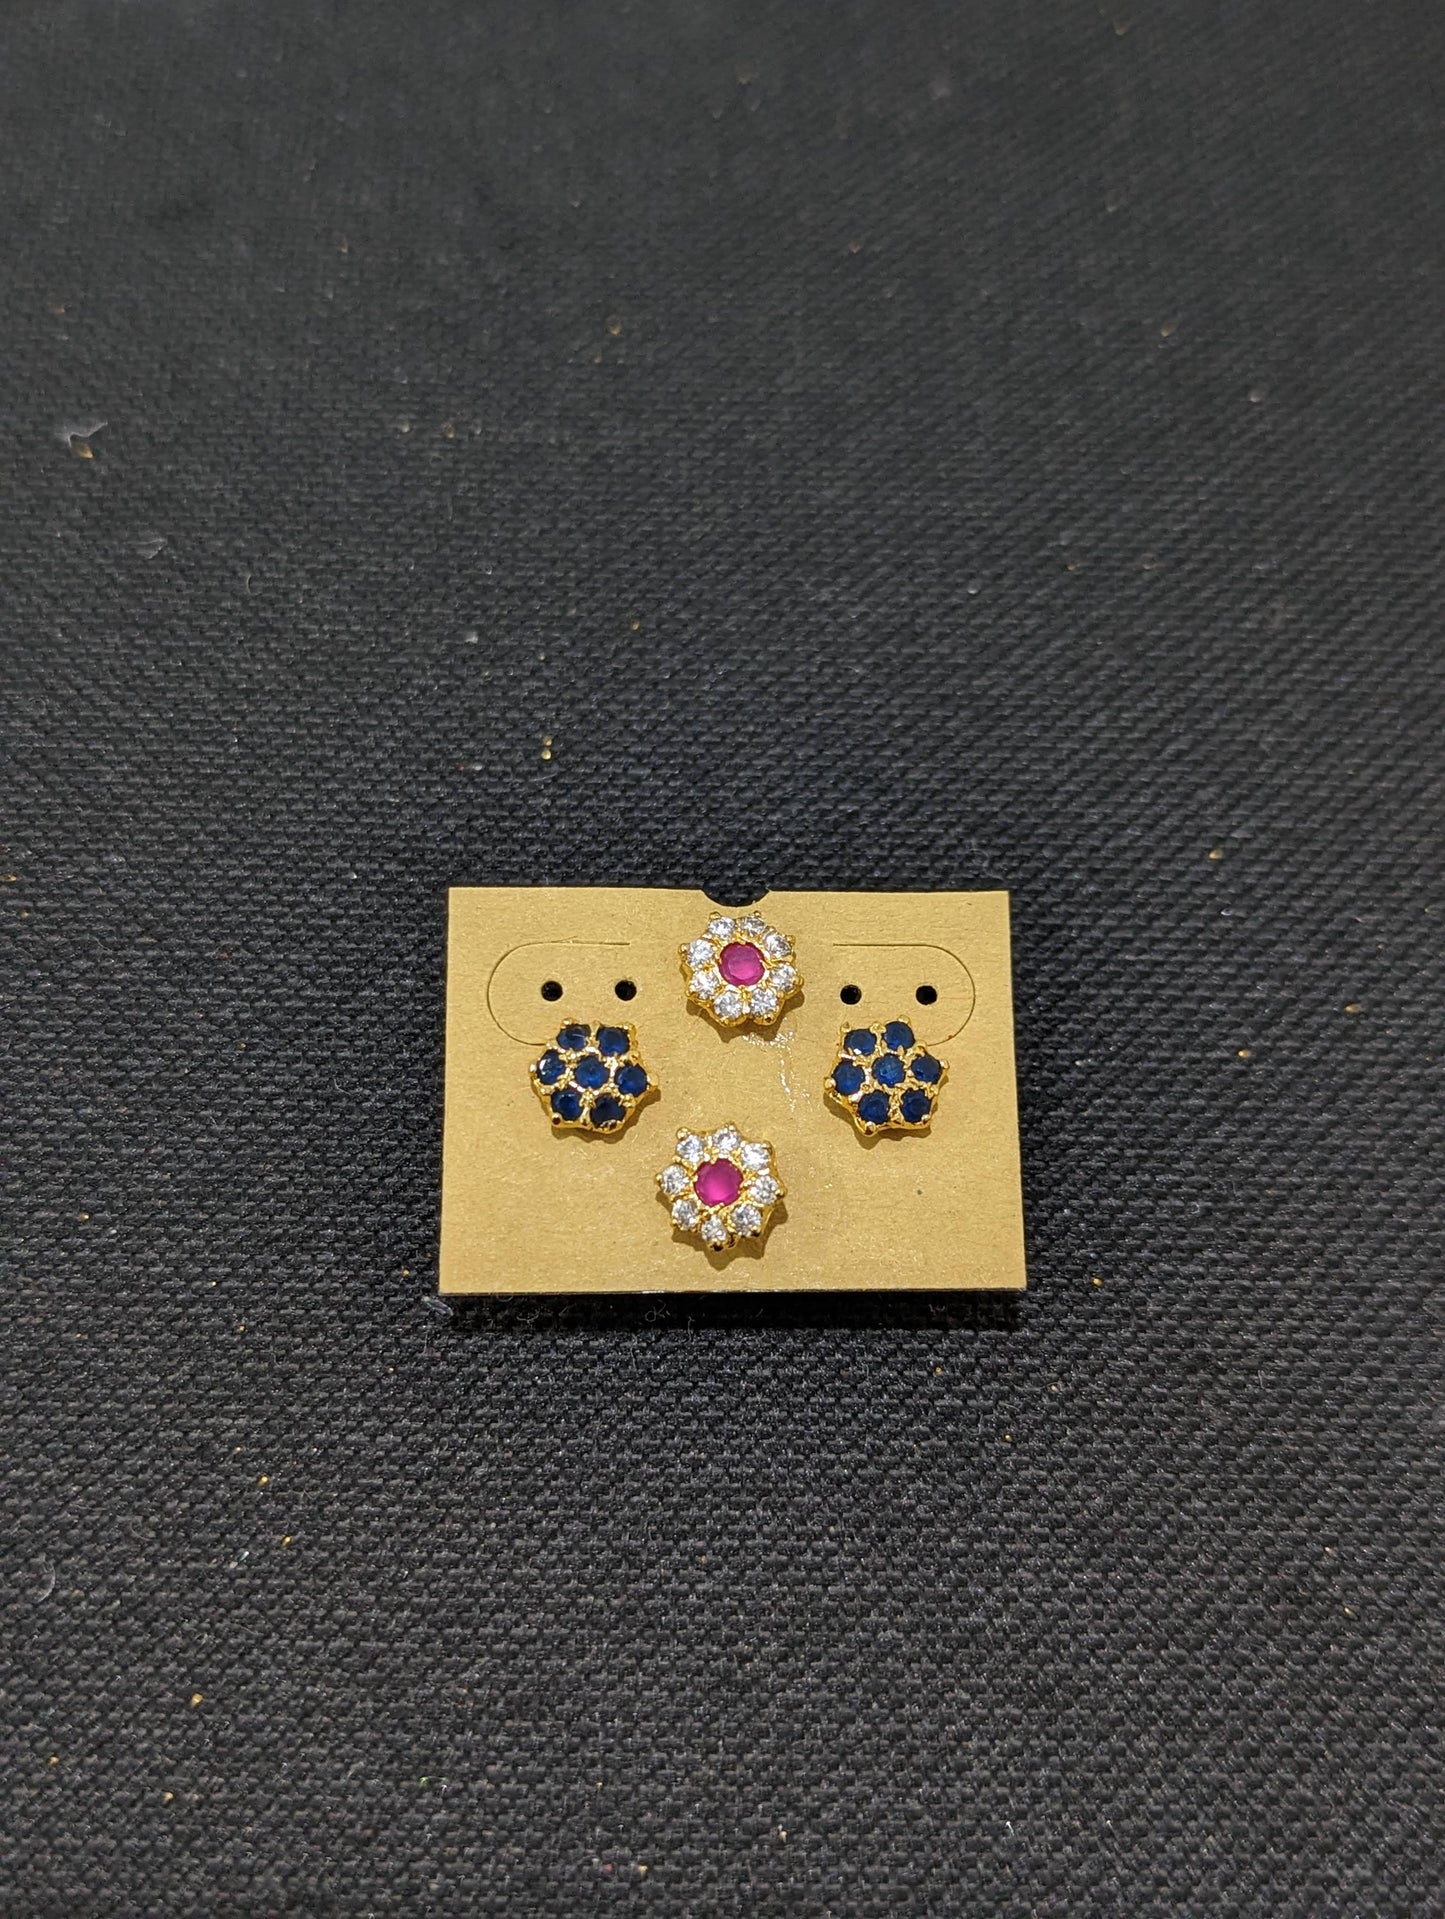 Tiny CZ stone Stud earrings - Set of 2 pairs